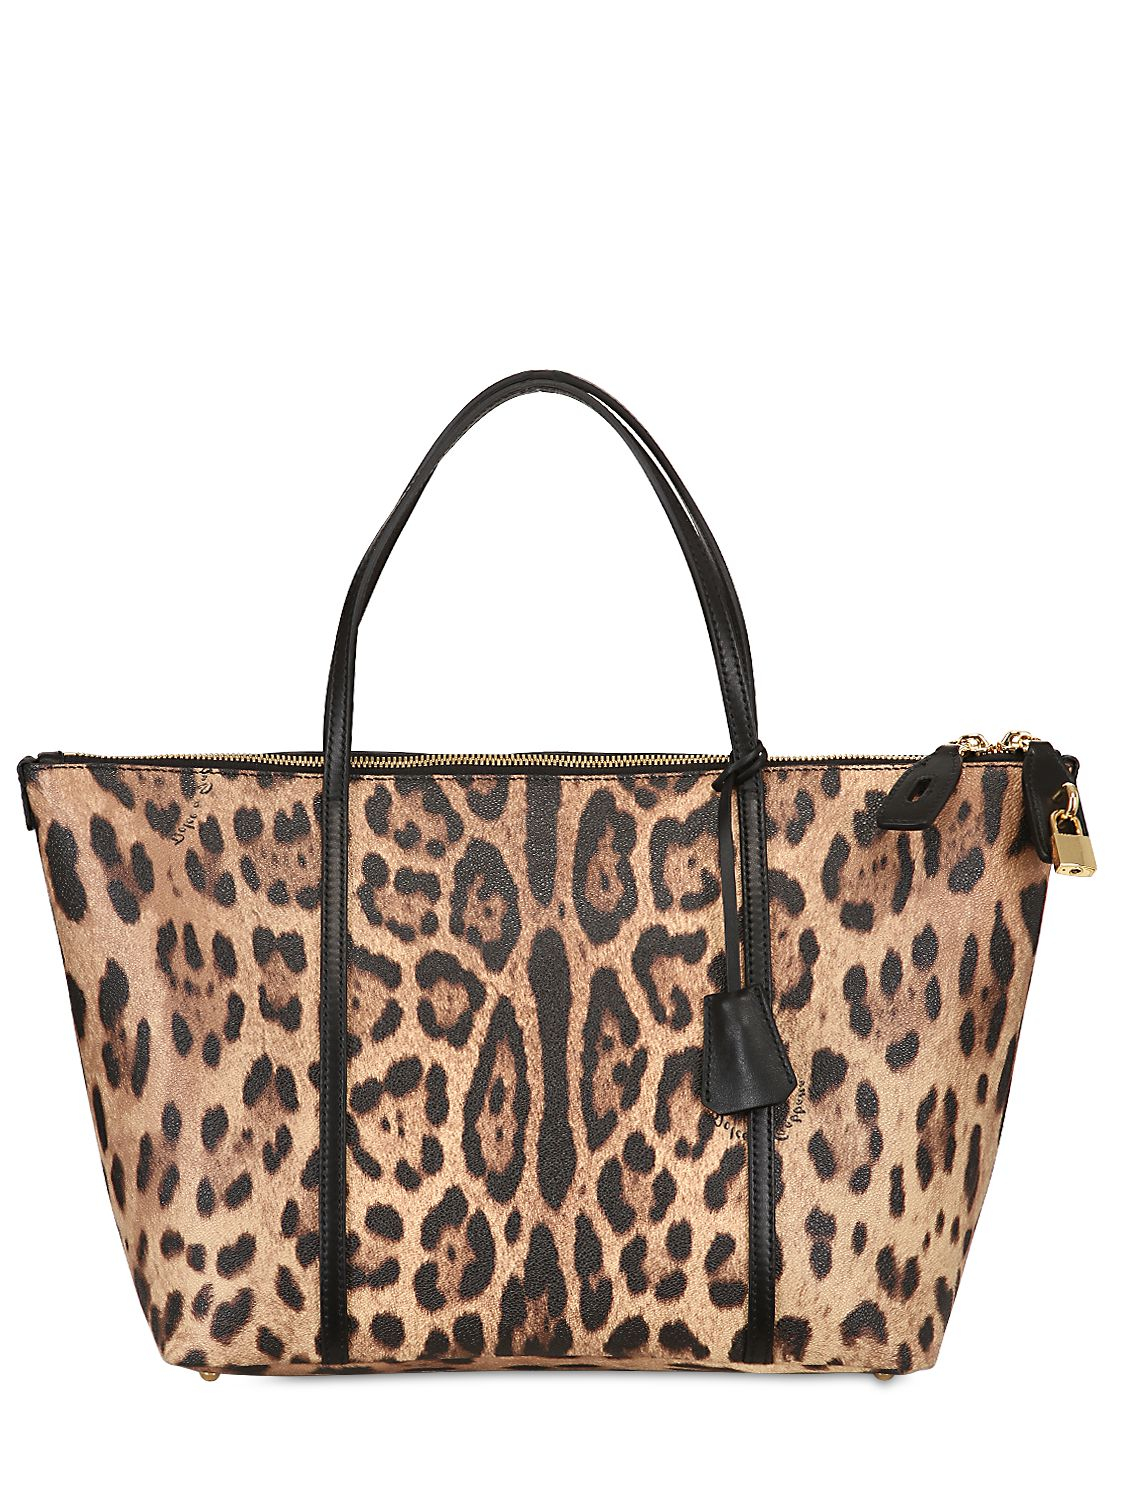 Dolce & gabbana Miss Escape Leopard Print Tote Bag | Lyst